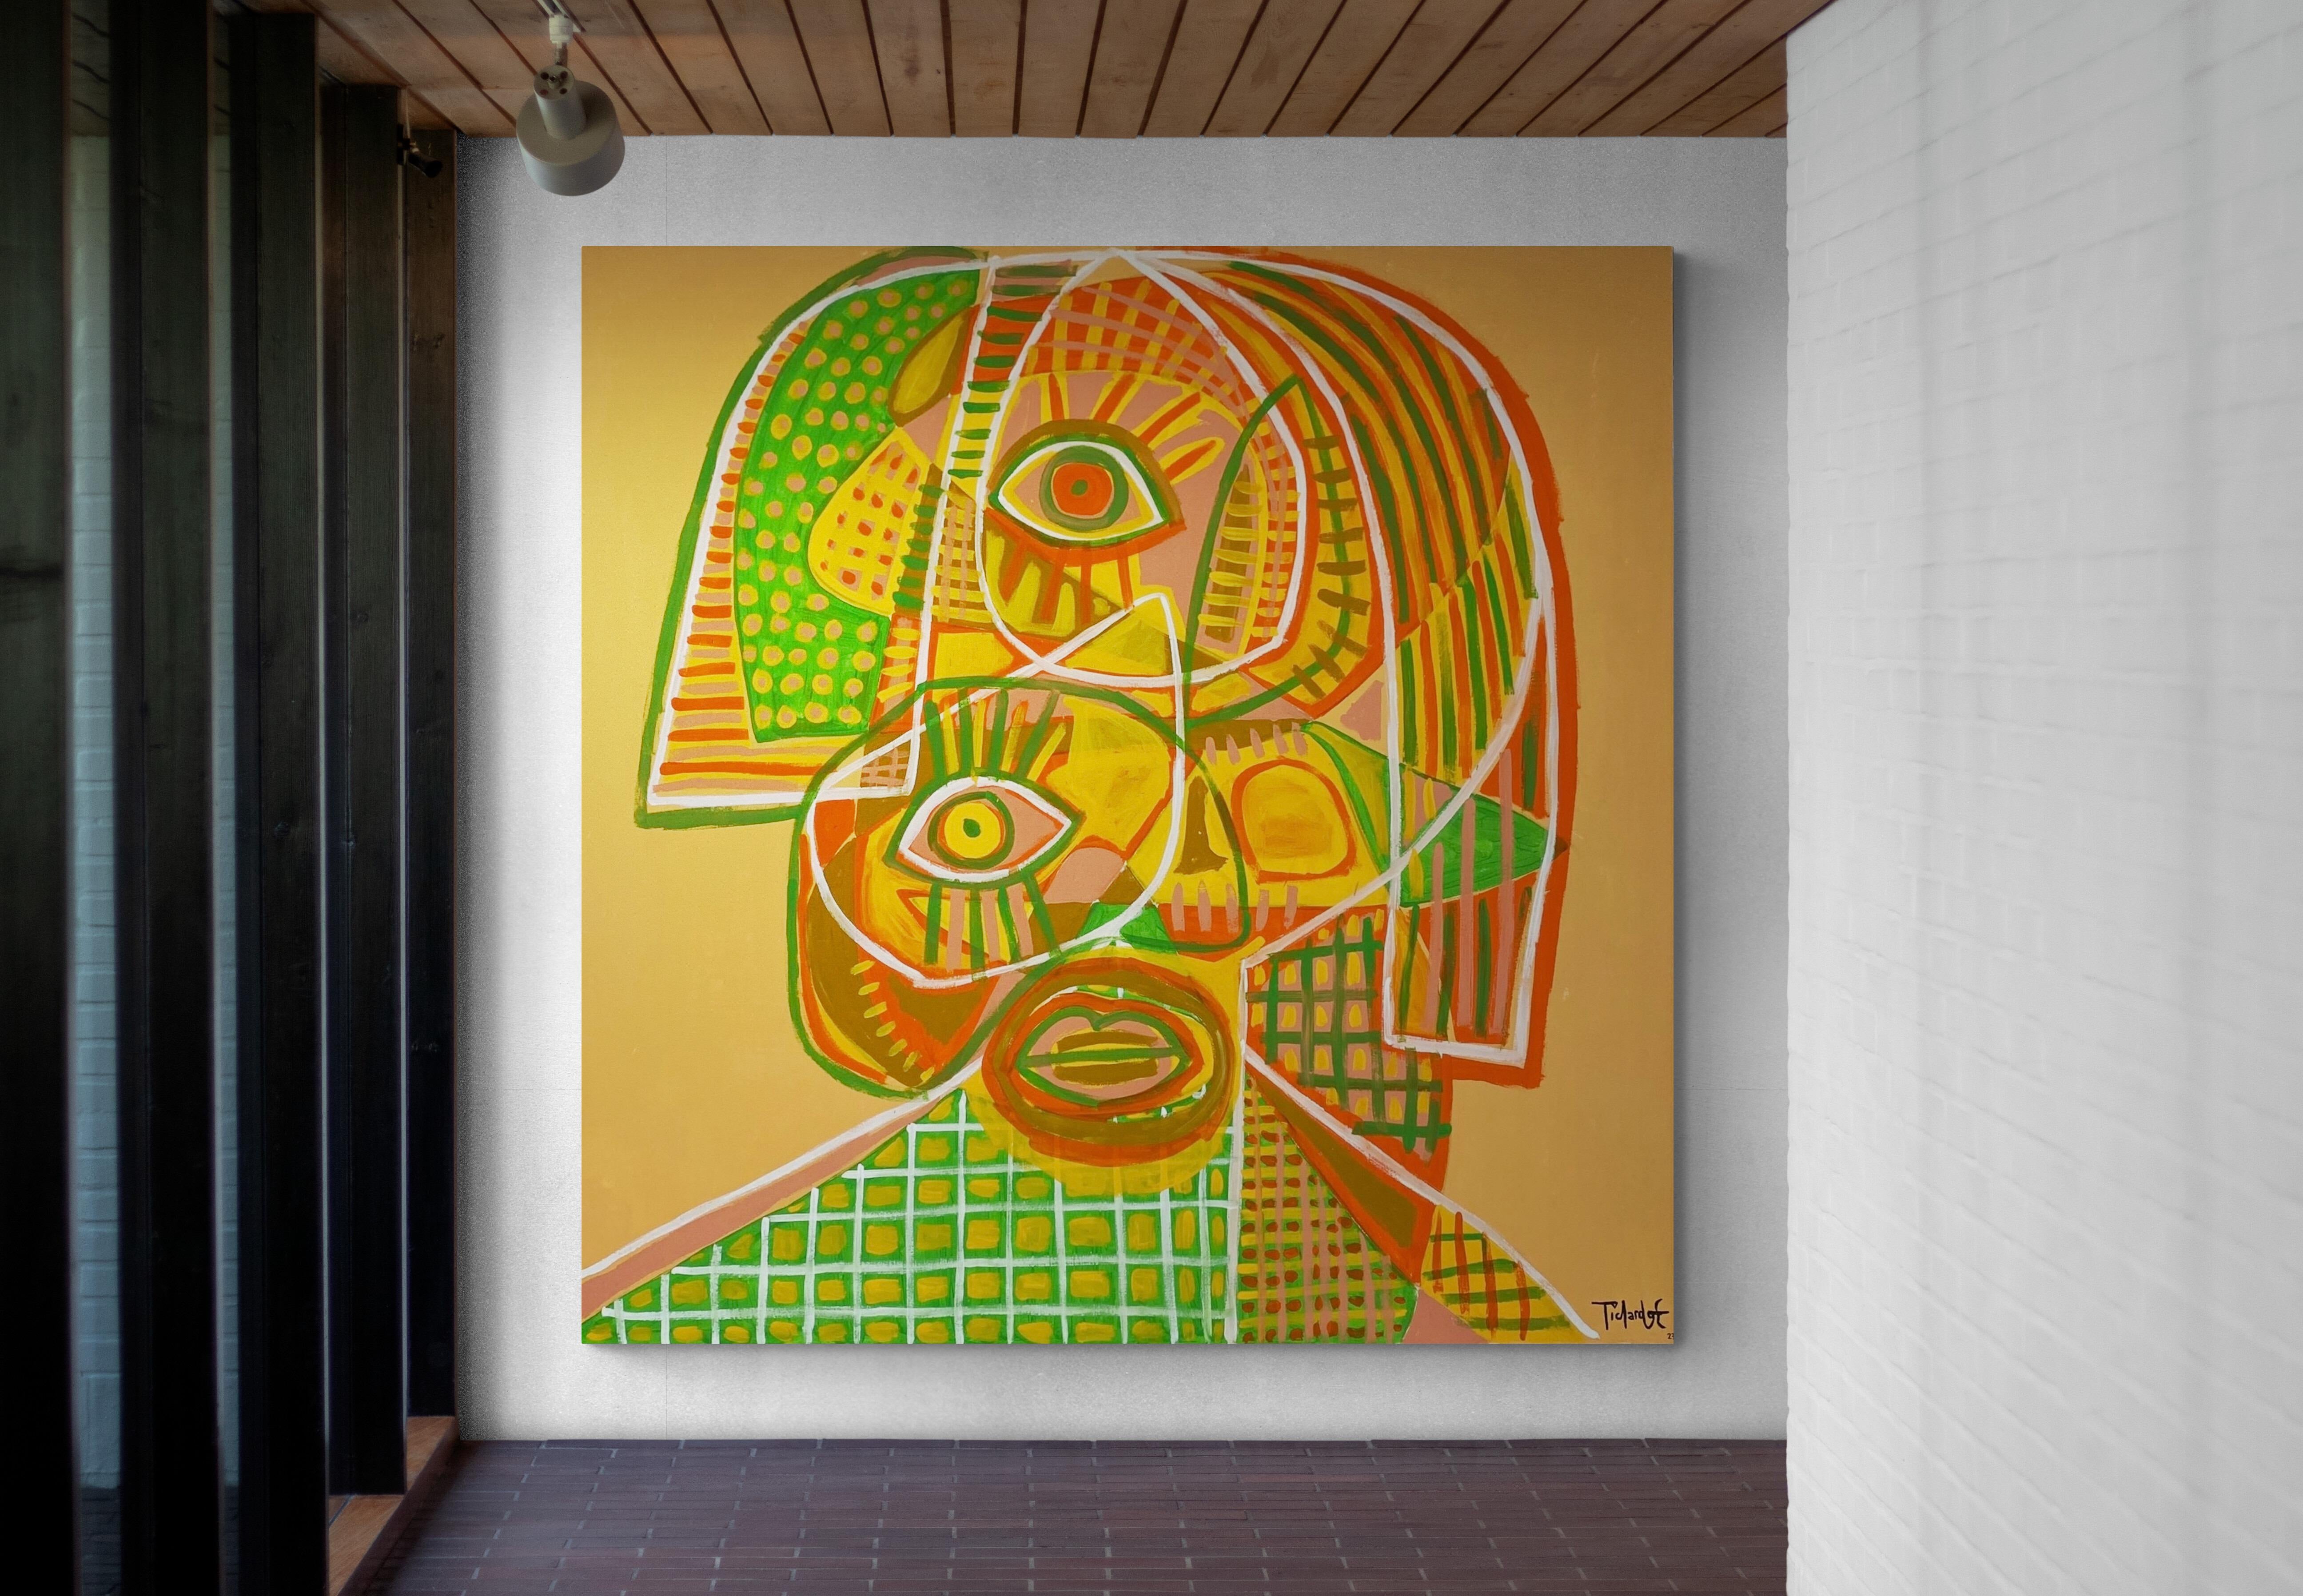 Contemporary Art, Abstract Painting
Acrylic on canvas
190x190cm
Signed 
FREE SHIPPING ROLLED UP IN TUBE 




About the artist
Enrique Pichardo (Mexico City, 1973) graduated from Escuela Nacional de Pintura, Escultura y Grabado (ENPEG) “La